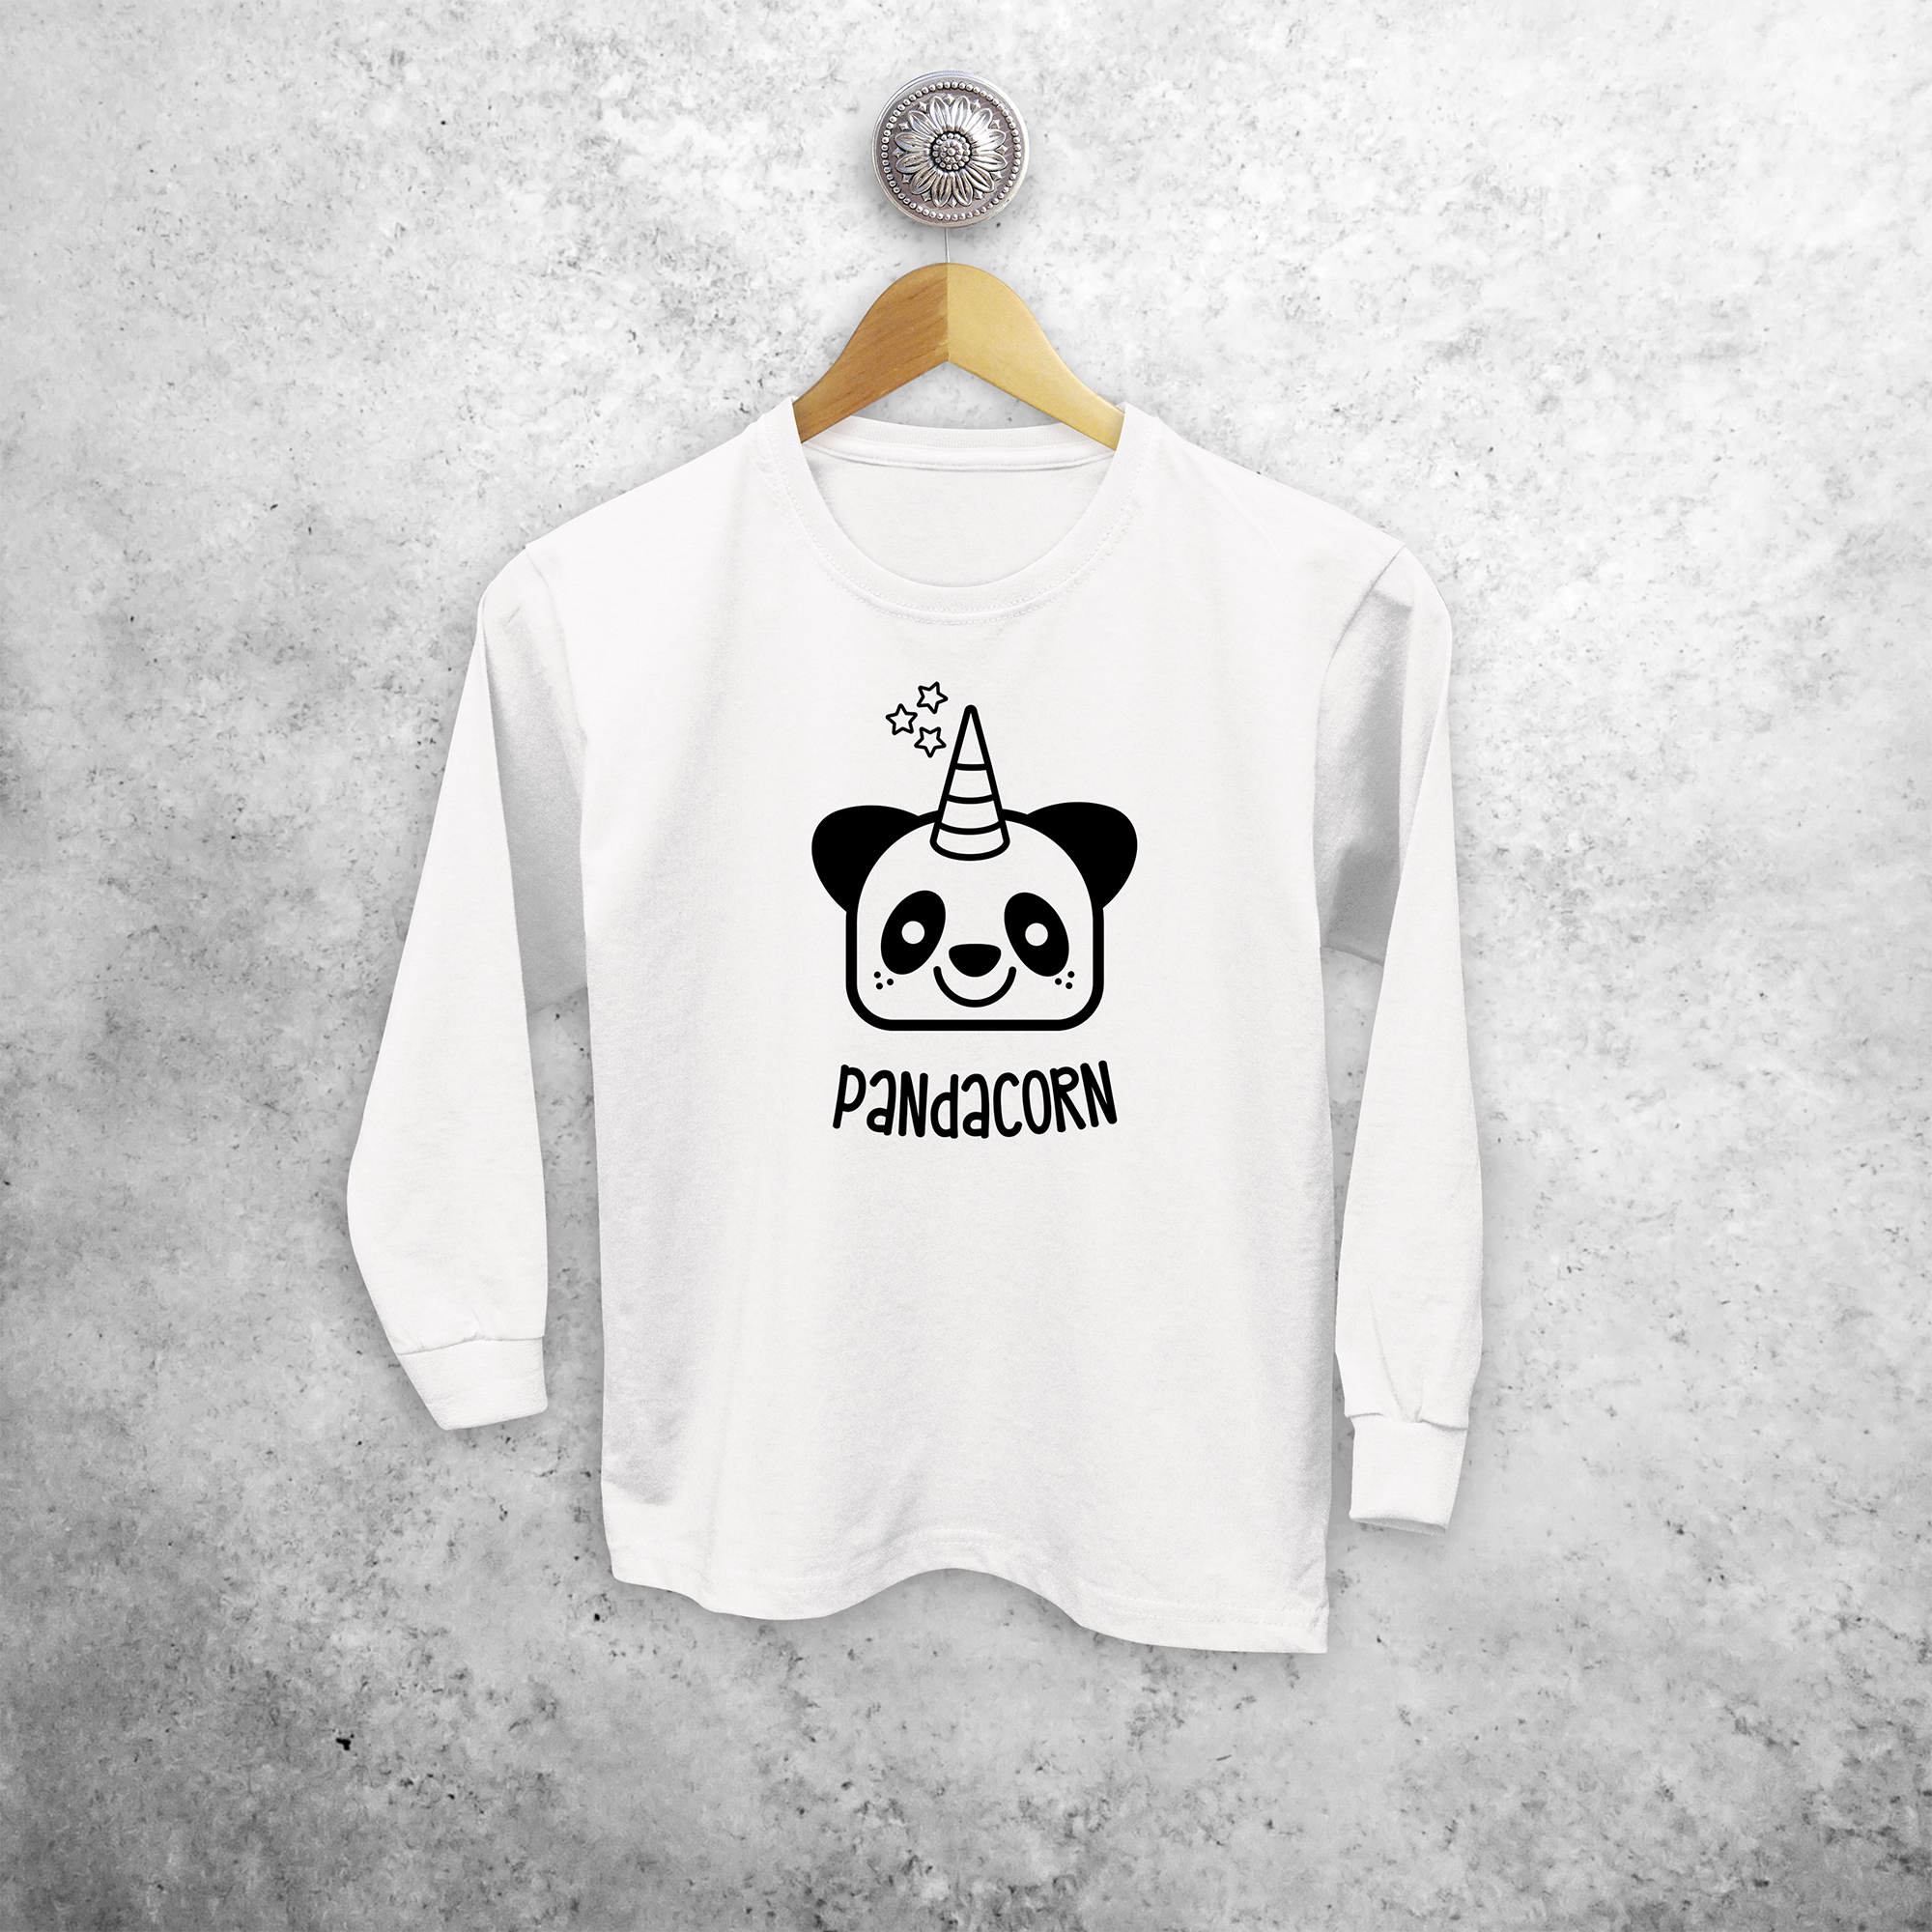 Pandacorn kids longsleeve shirt